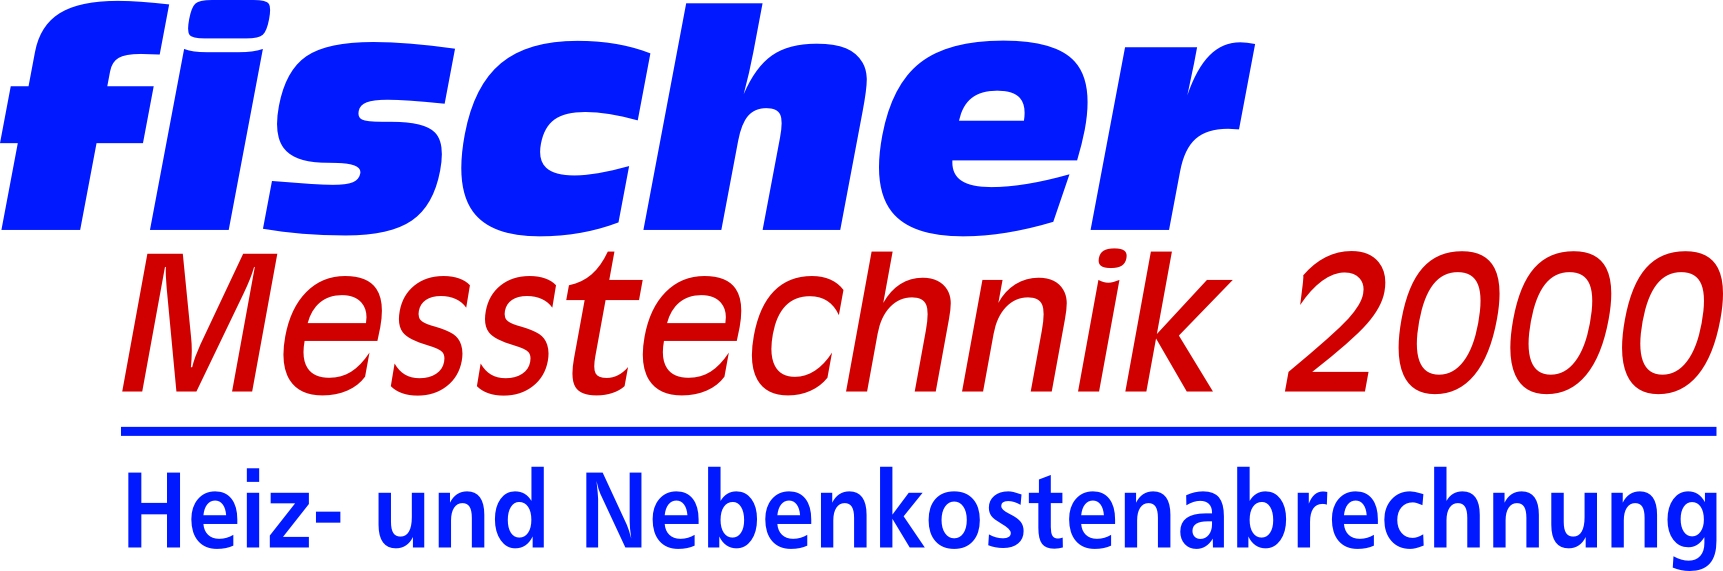 Fischer Messtechnik 2000